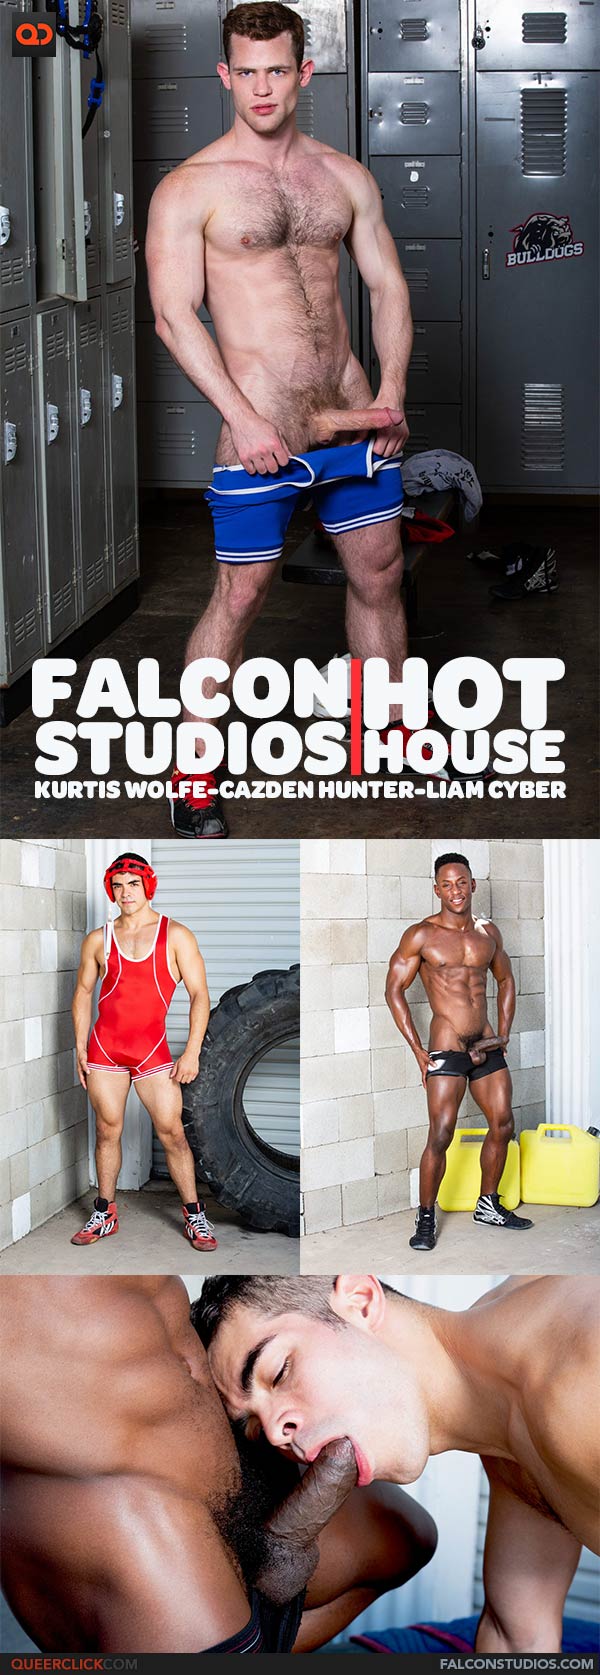 Falcon Studios/Hot House: Kurtis Wolfe, Cazden Hunter and Liam Cyber